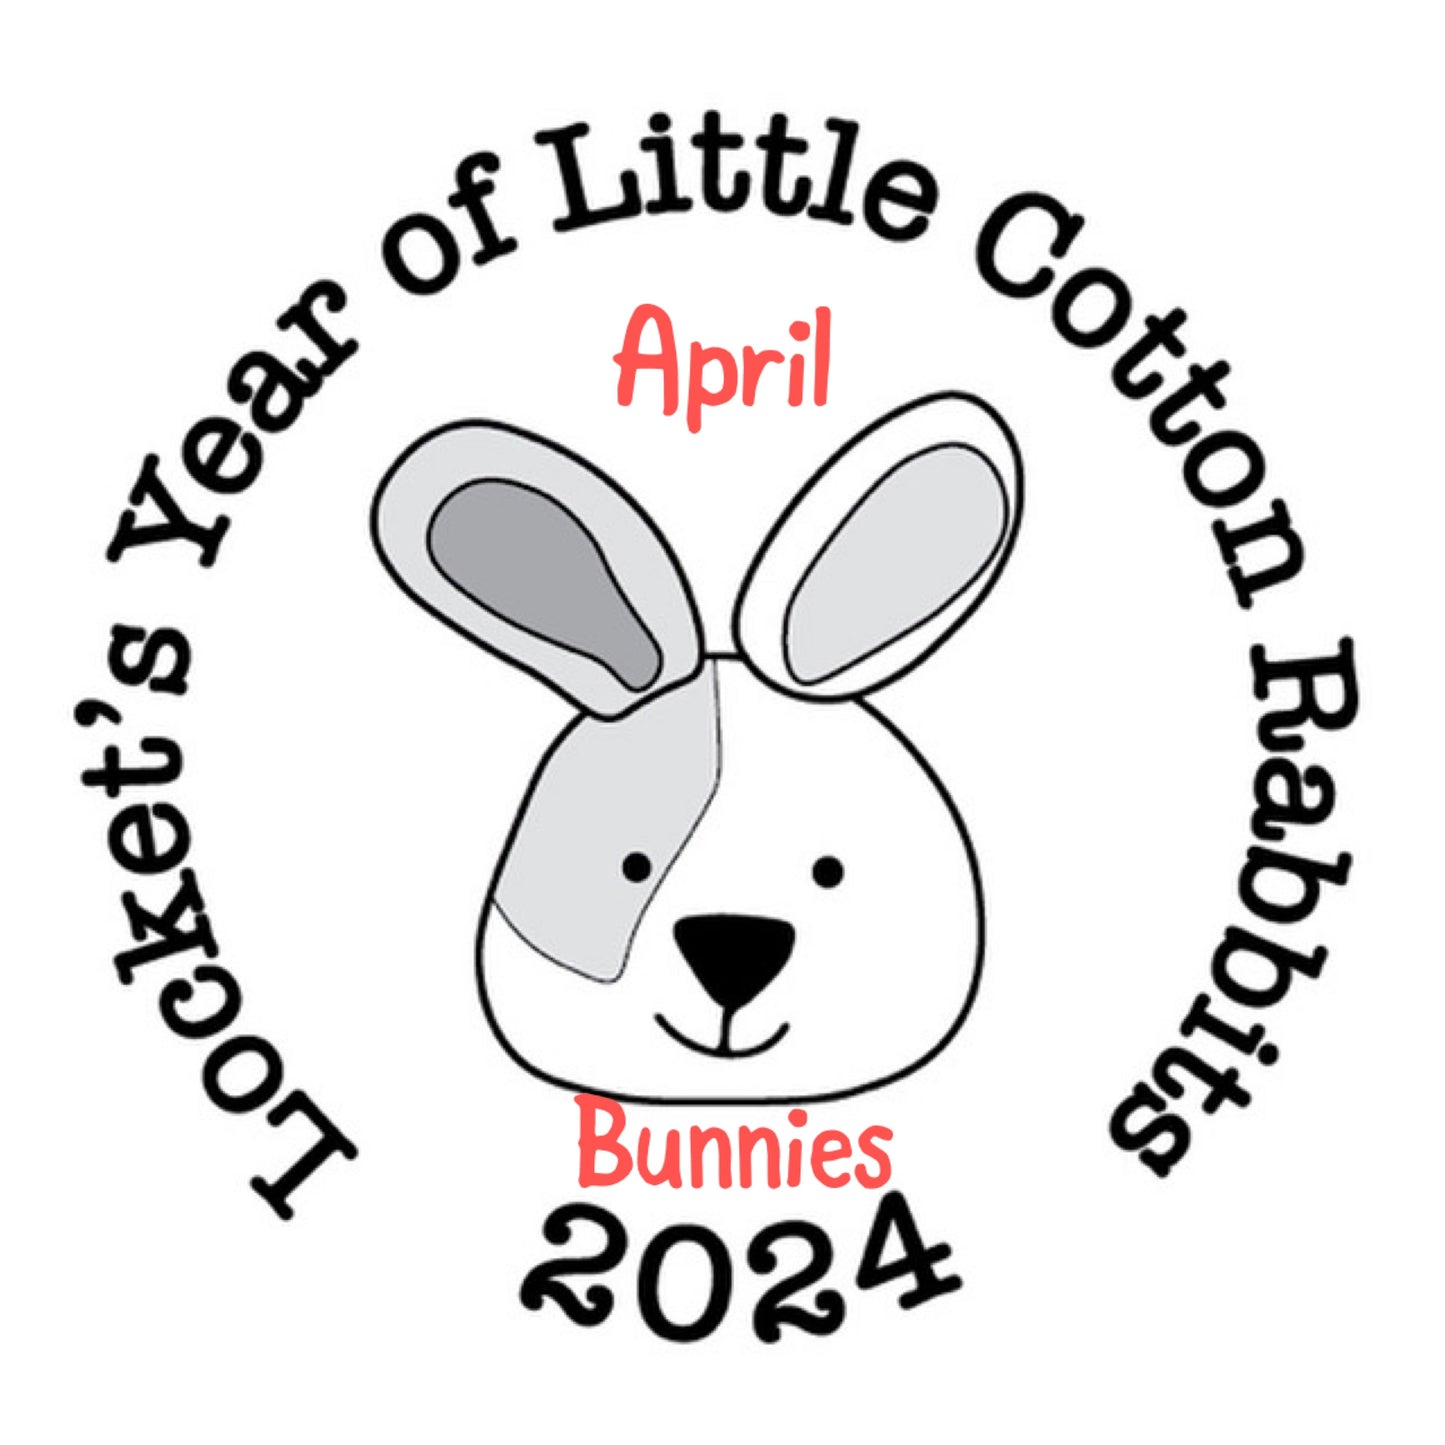 Locket's Year of Little Cotton Rabbits - Barney Bunny